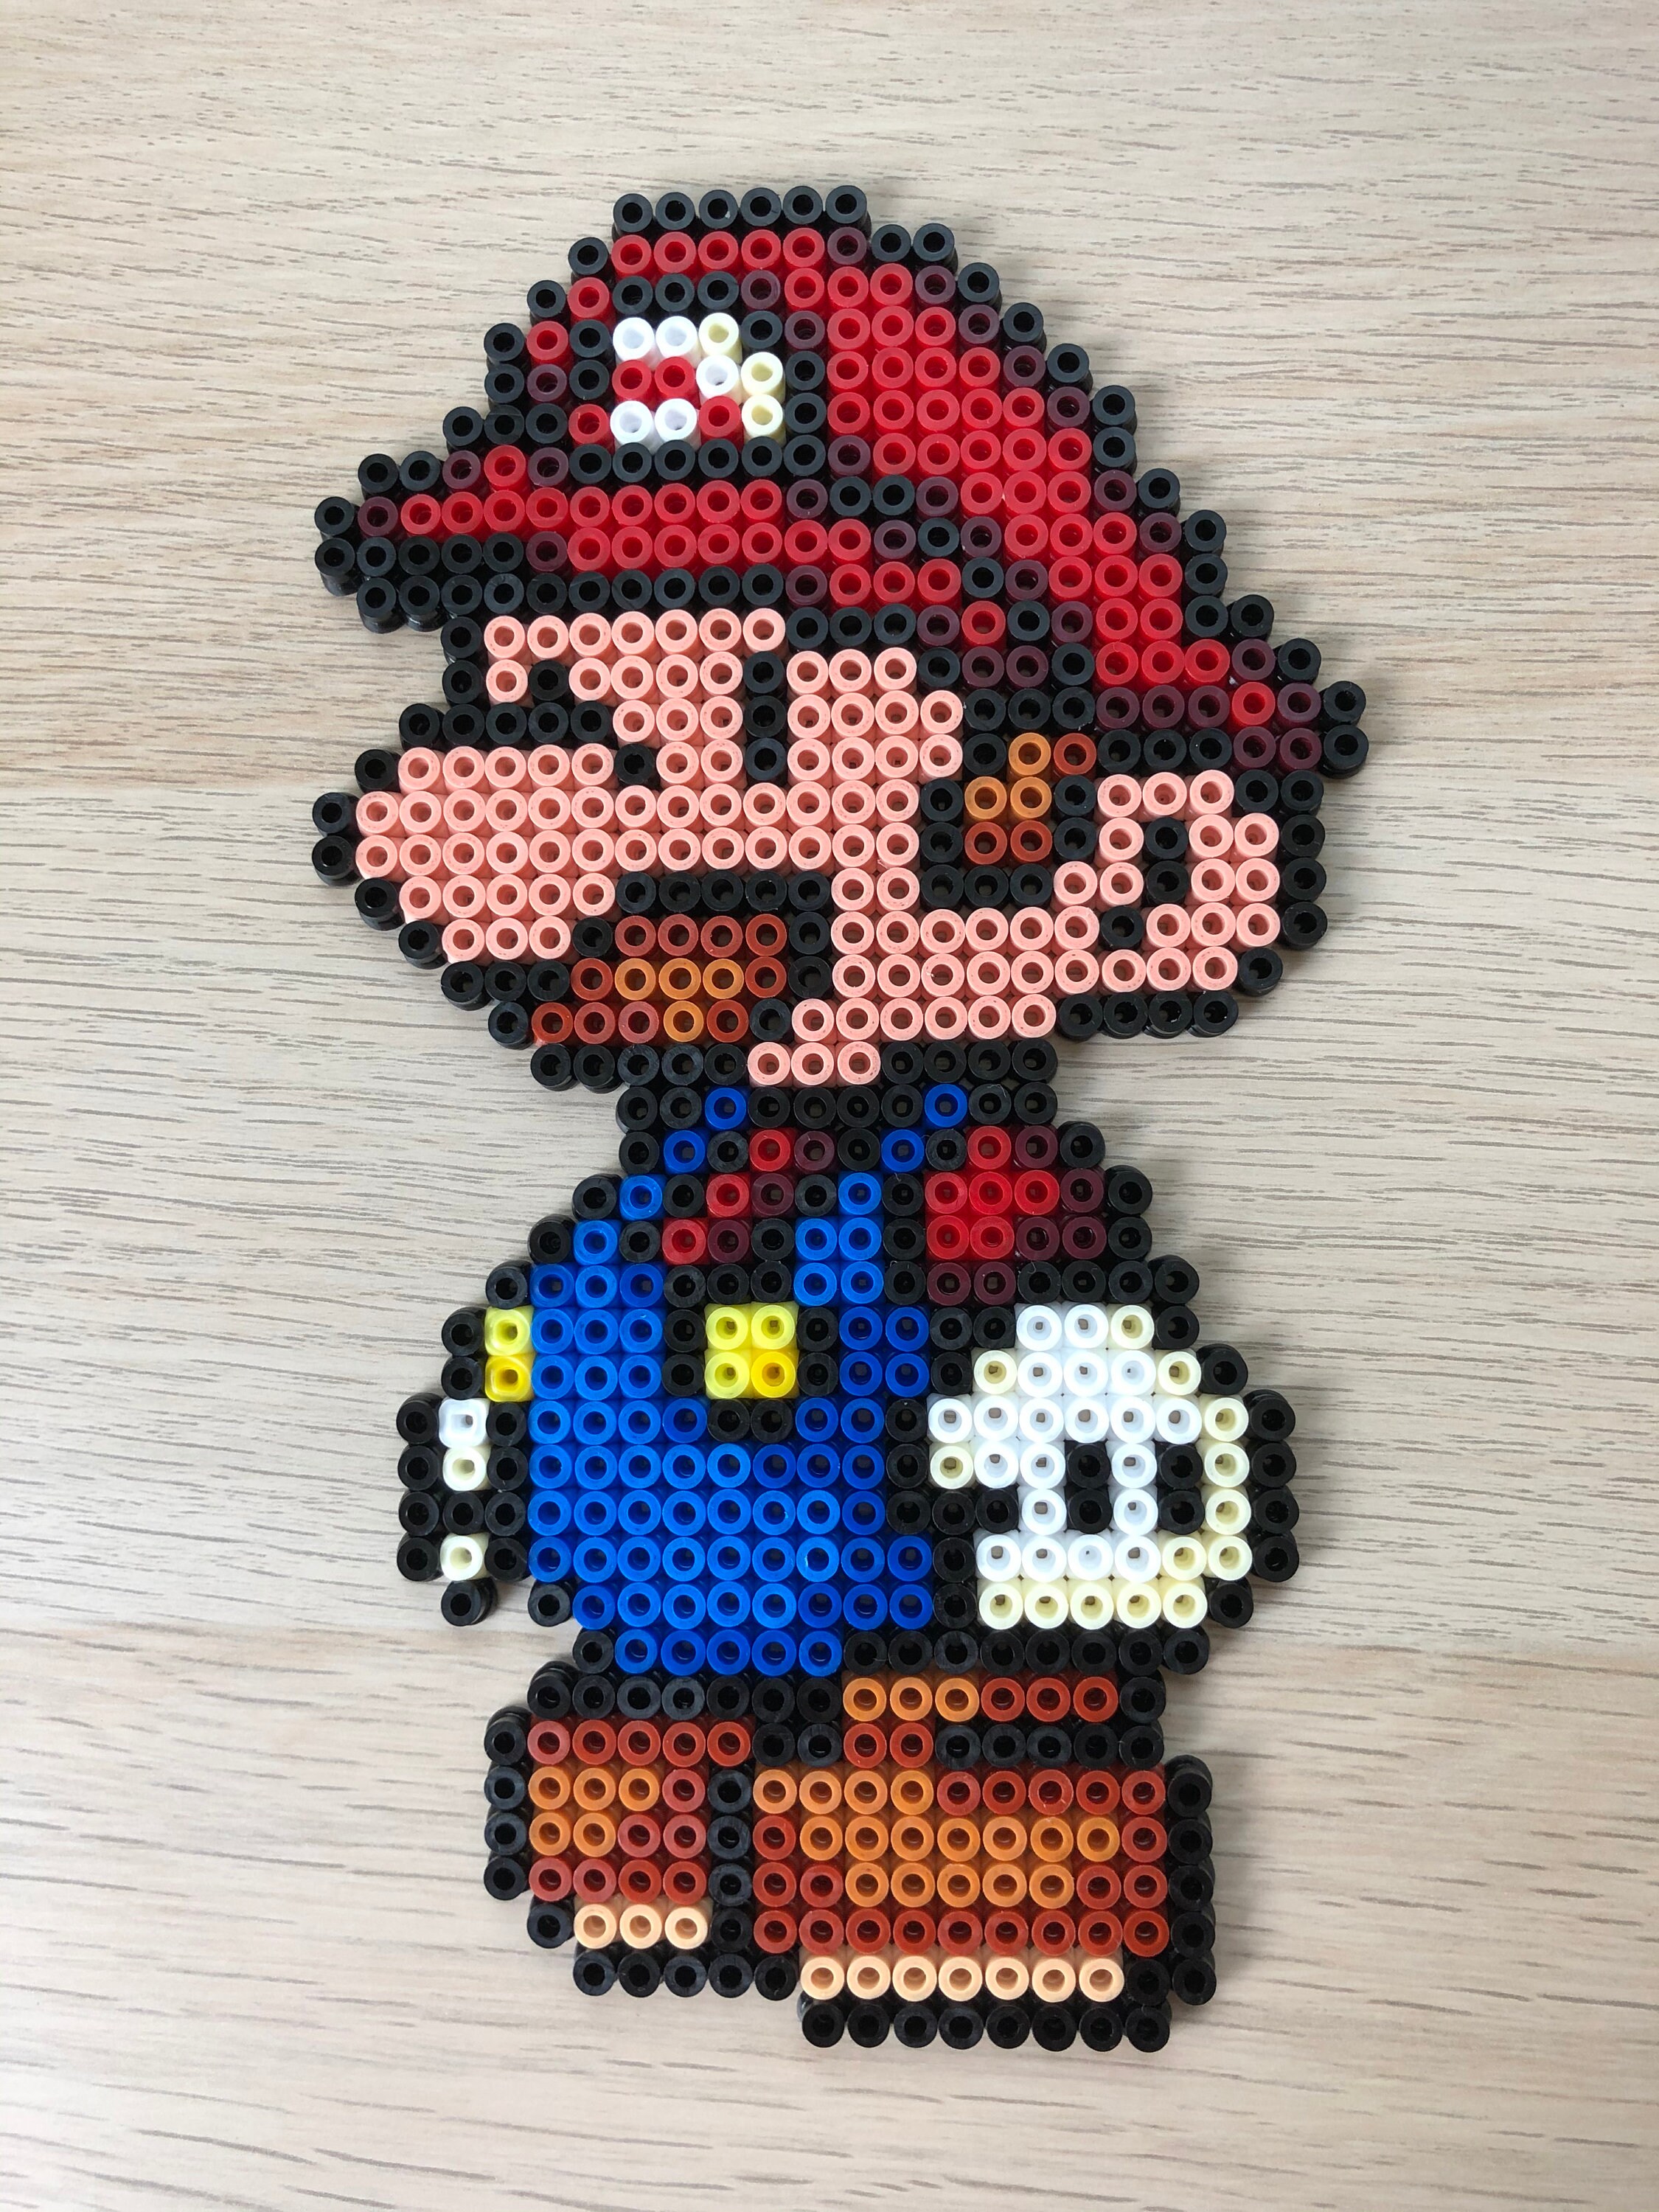 Buy Large Nintendo Super Mario Figures Made of Ironing Beads